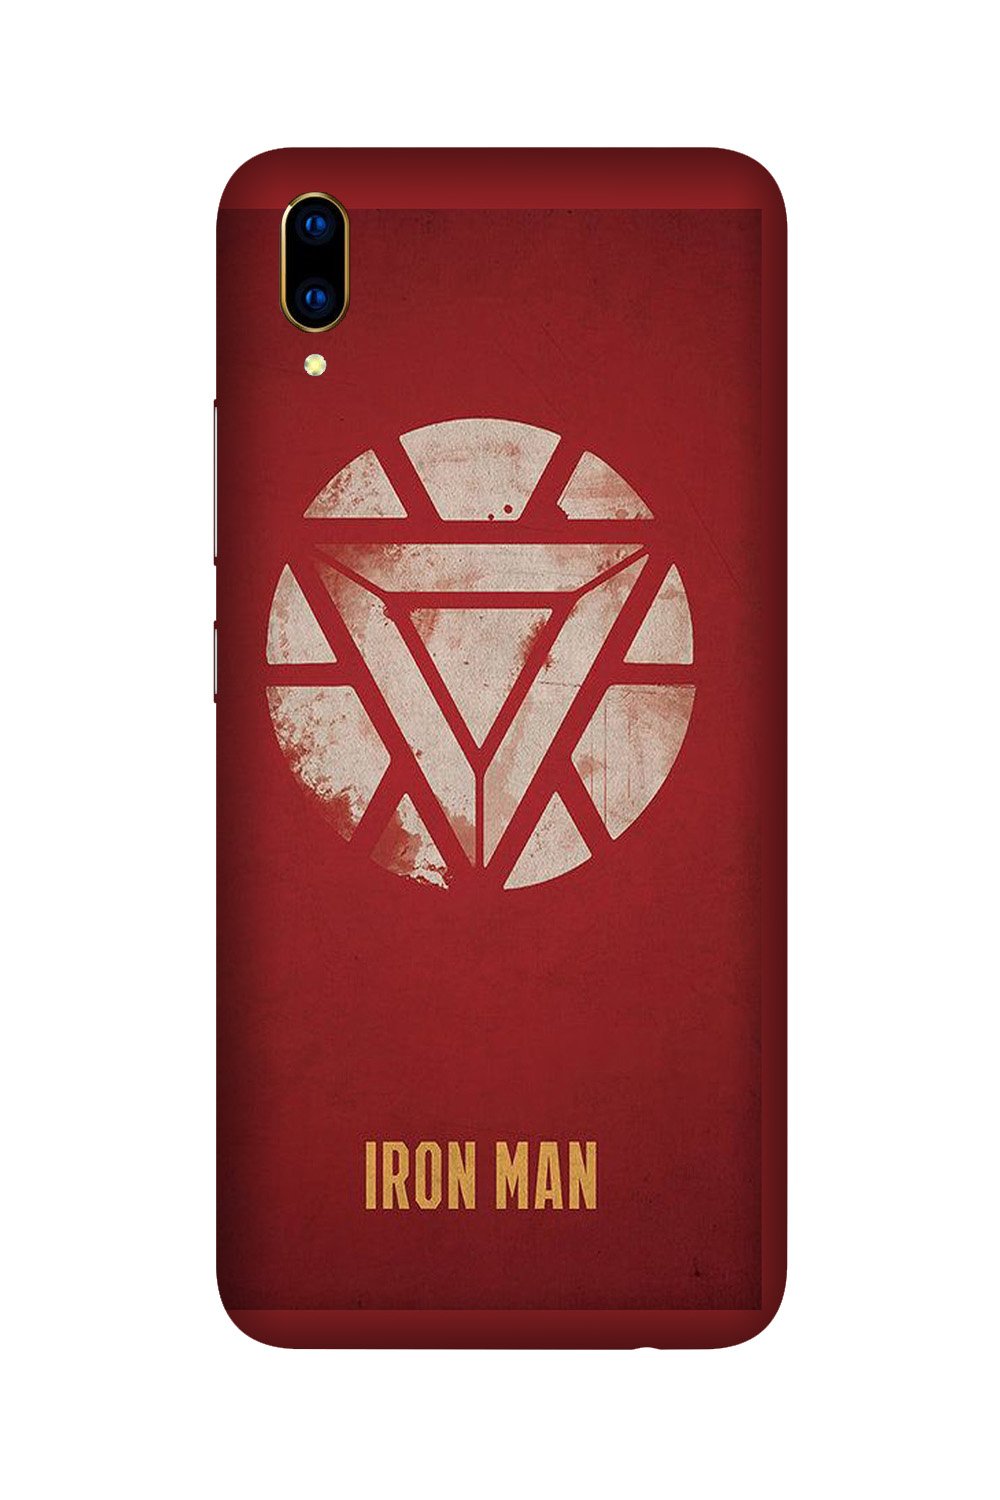 Iron Man Superhero Case for Vivo Nex(Design - 115)